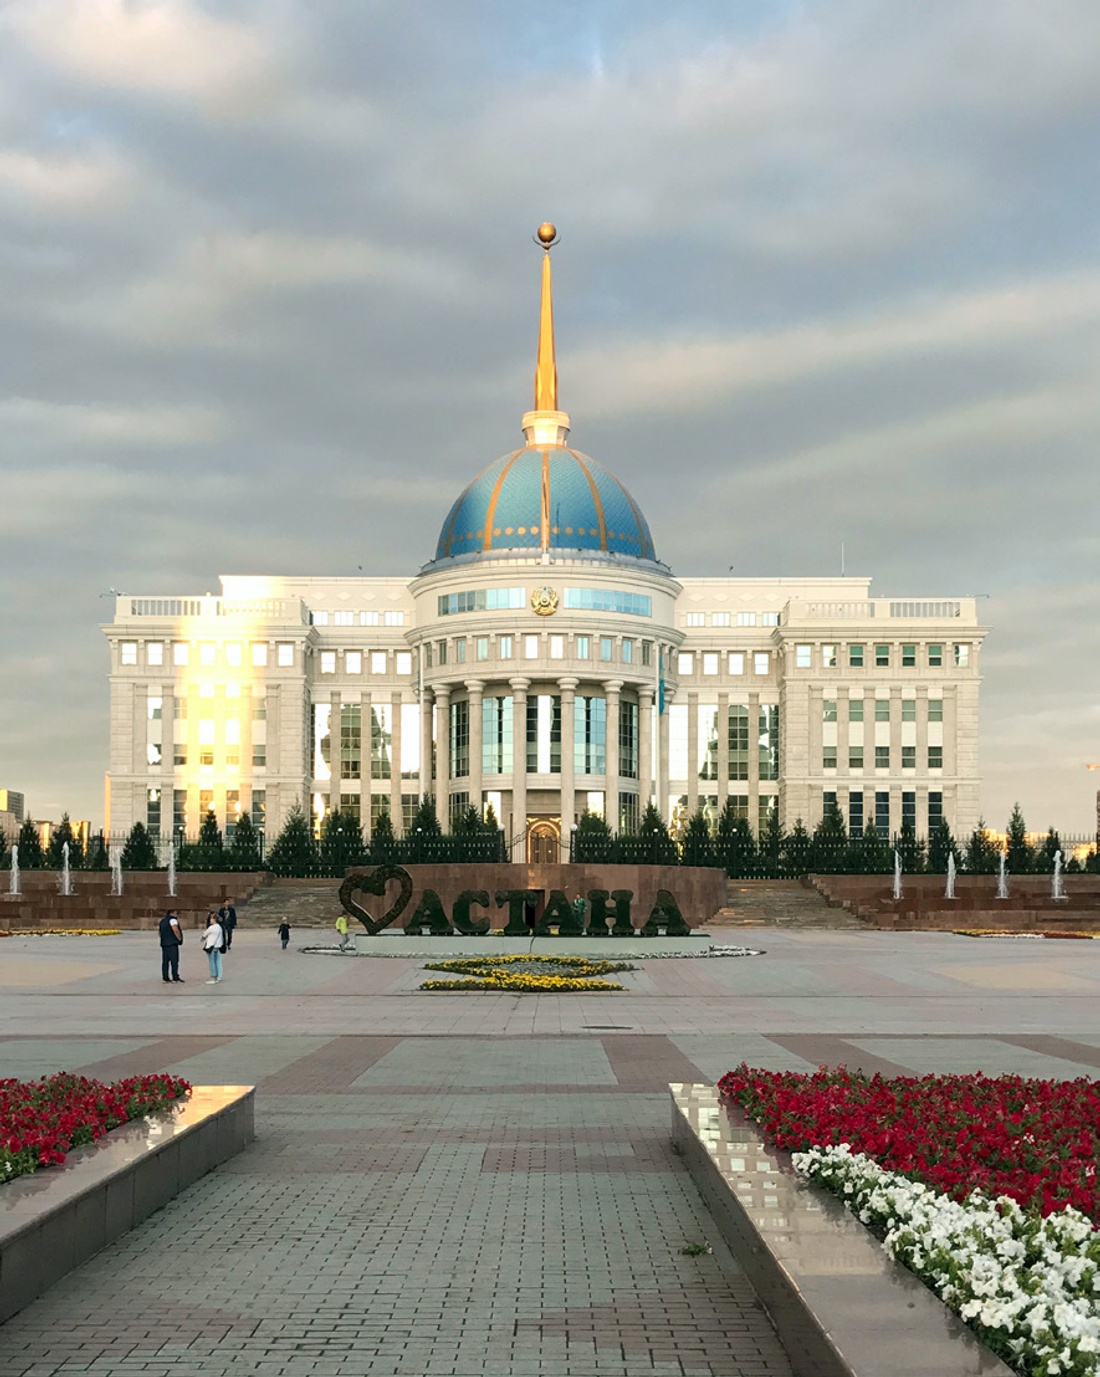 Ak Orda Presidential Palace, 2014.